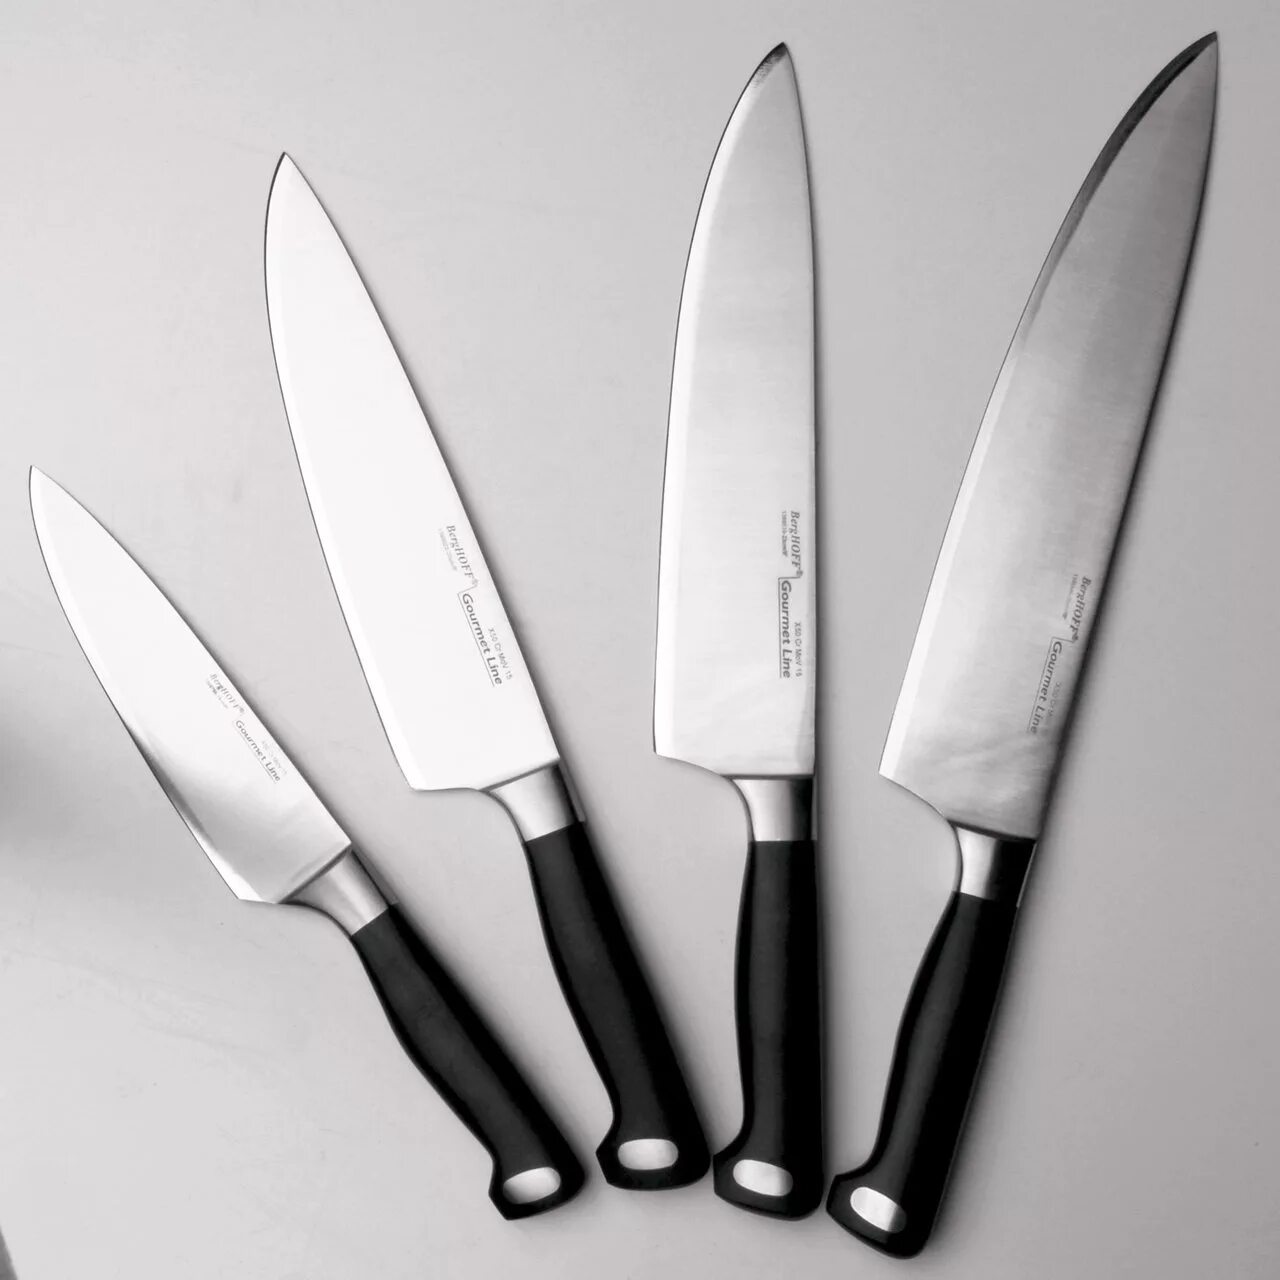 Нож поварской BERGHOFF Gourmet. Tojiro Julia Vysotskaya professional Pro Дамаск. Нож поварской "Gourmet", 20 см. BERGHOFF нож разделочный Gourmet 20 см. Повар нож купить